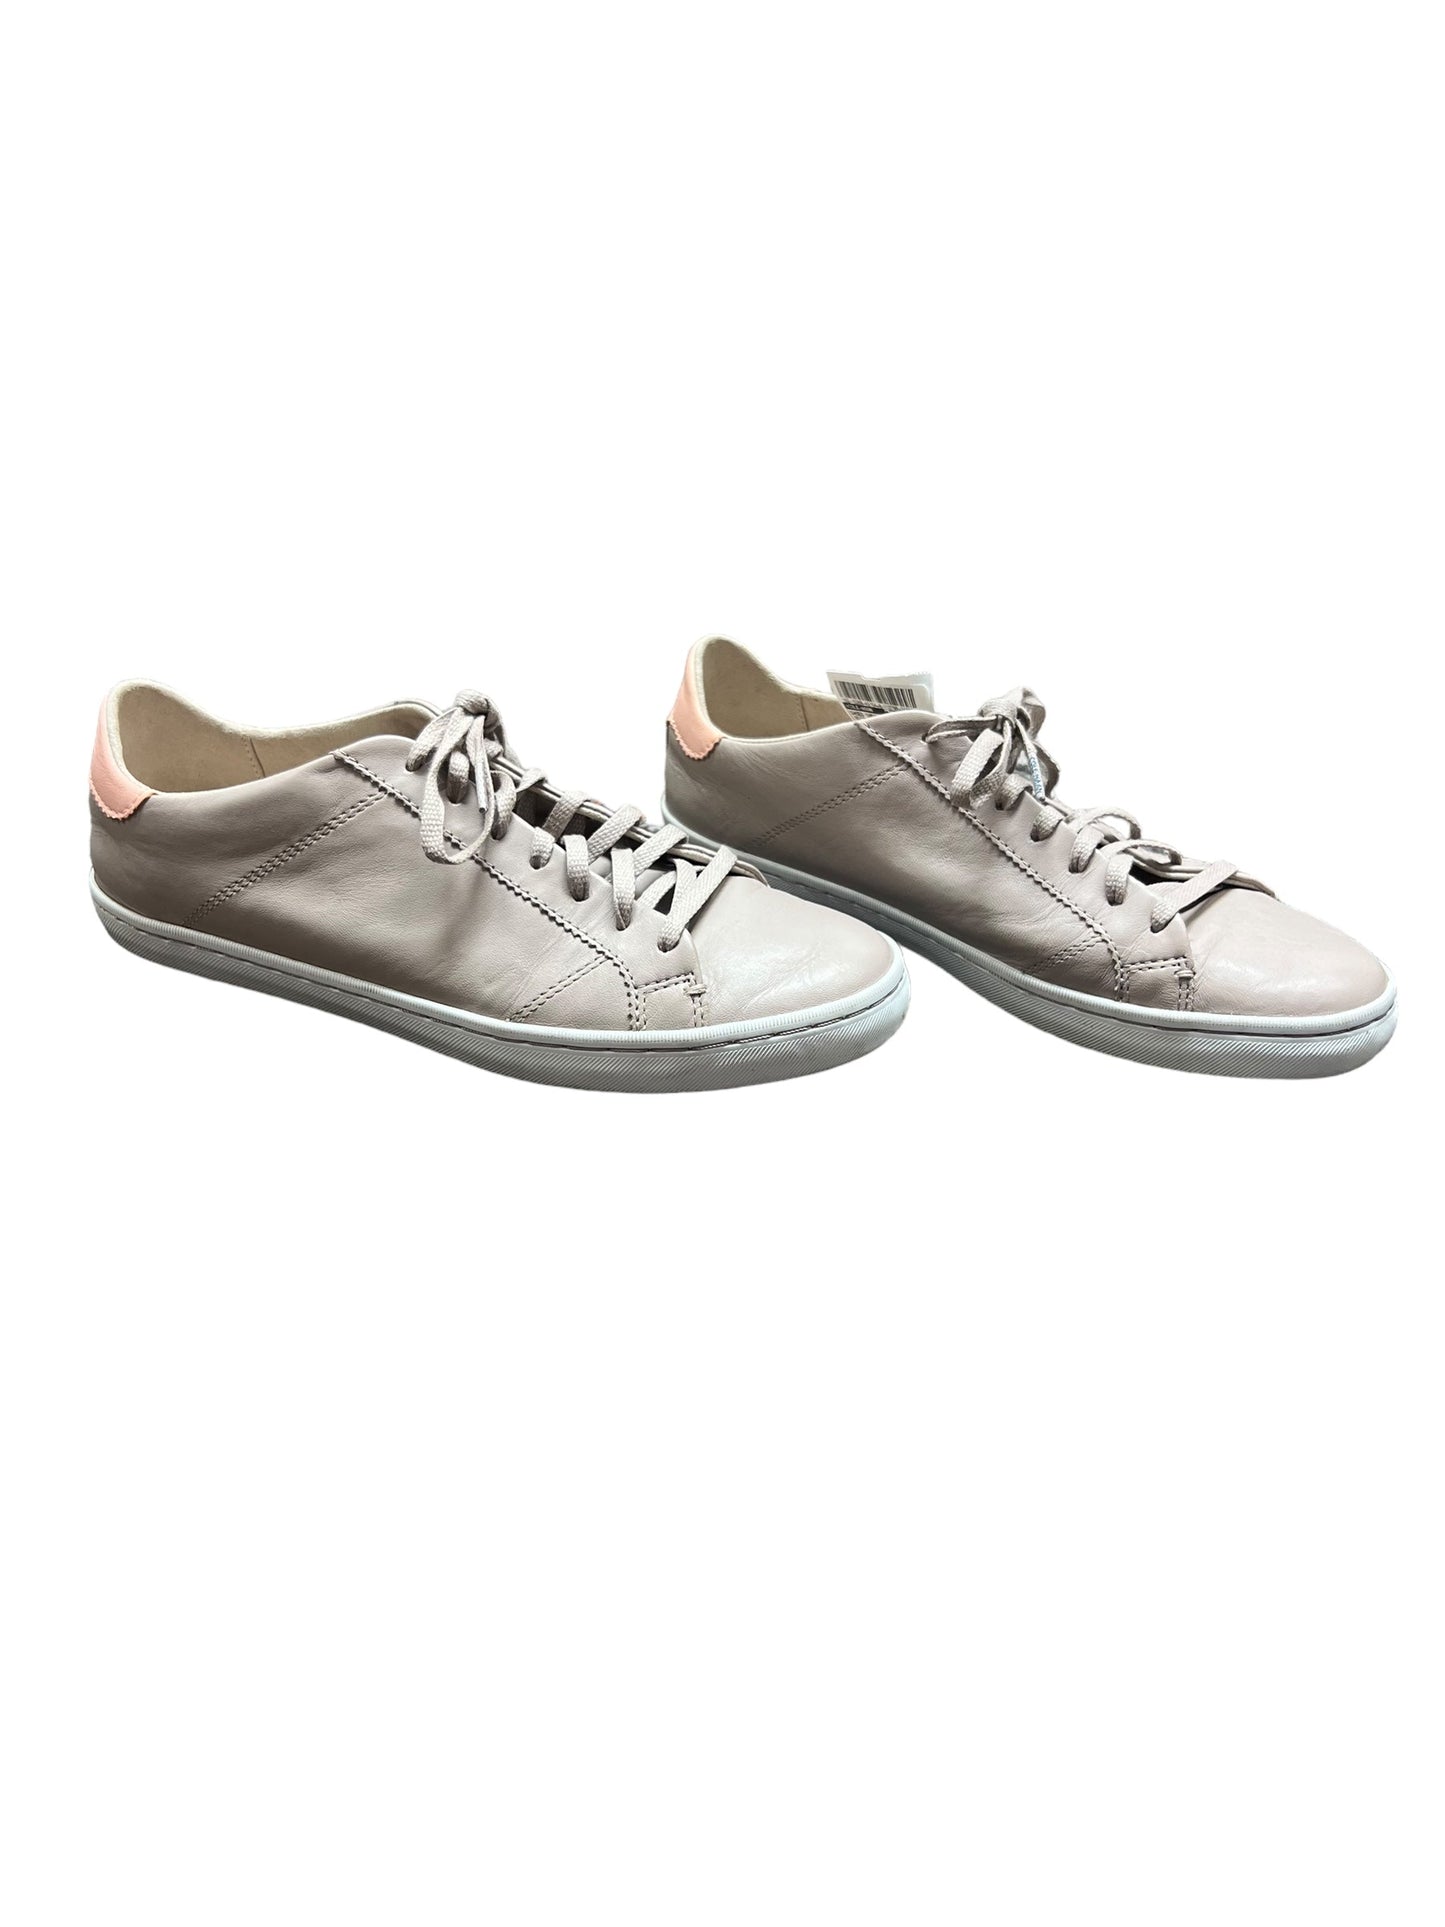 Beige Shoes Sneakers Cole-haan, Size 9